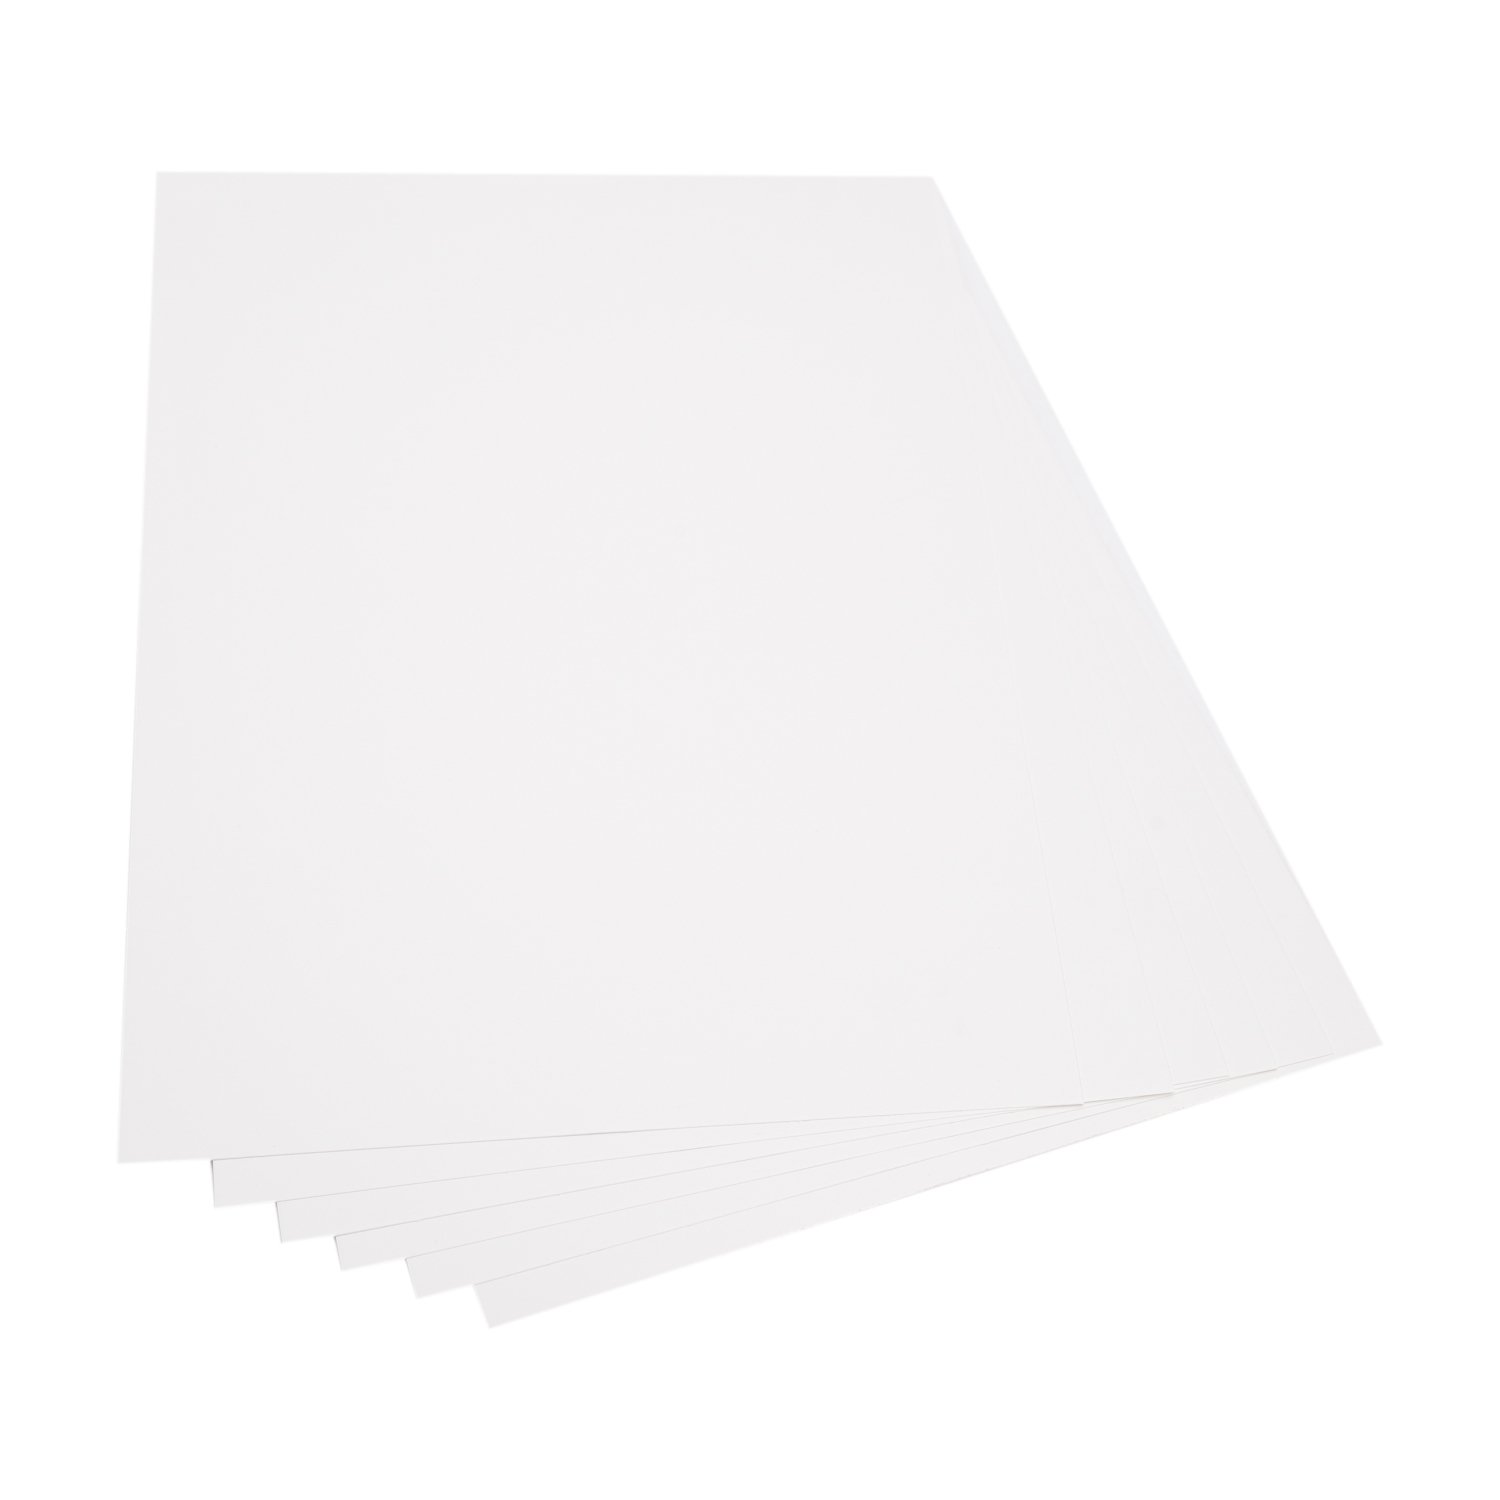 Картон белый Каляка-Маляка 6 листов А4 - фото 3